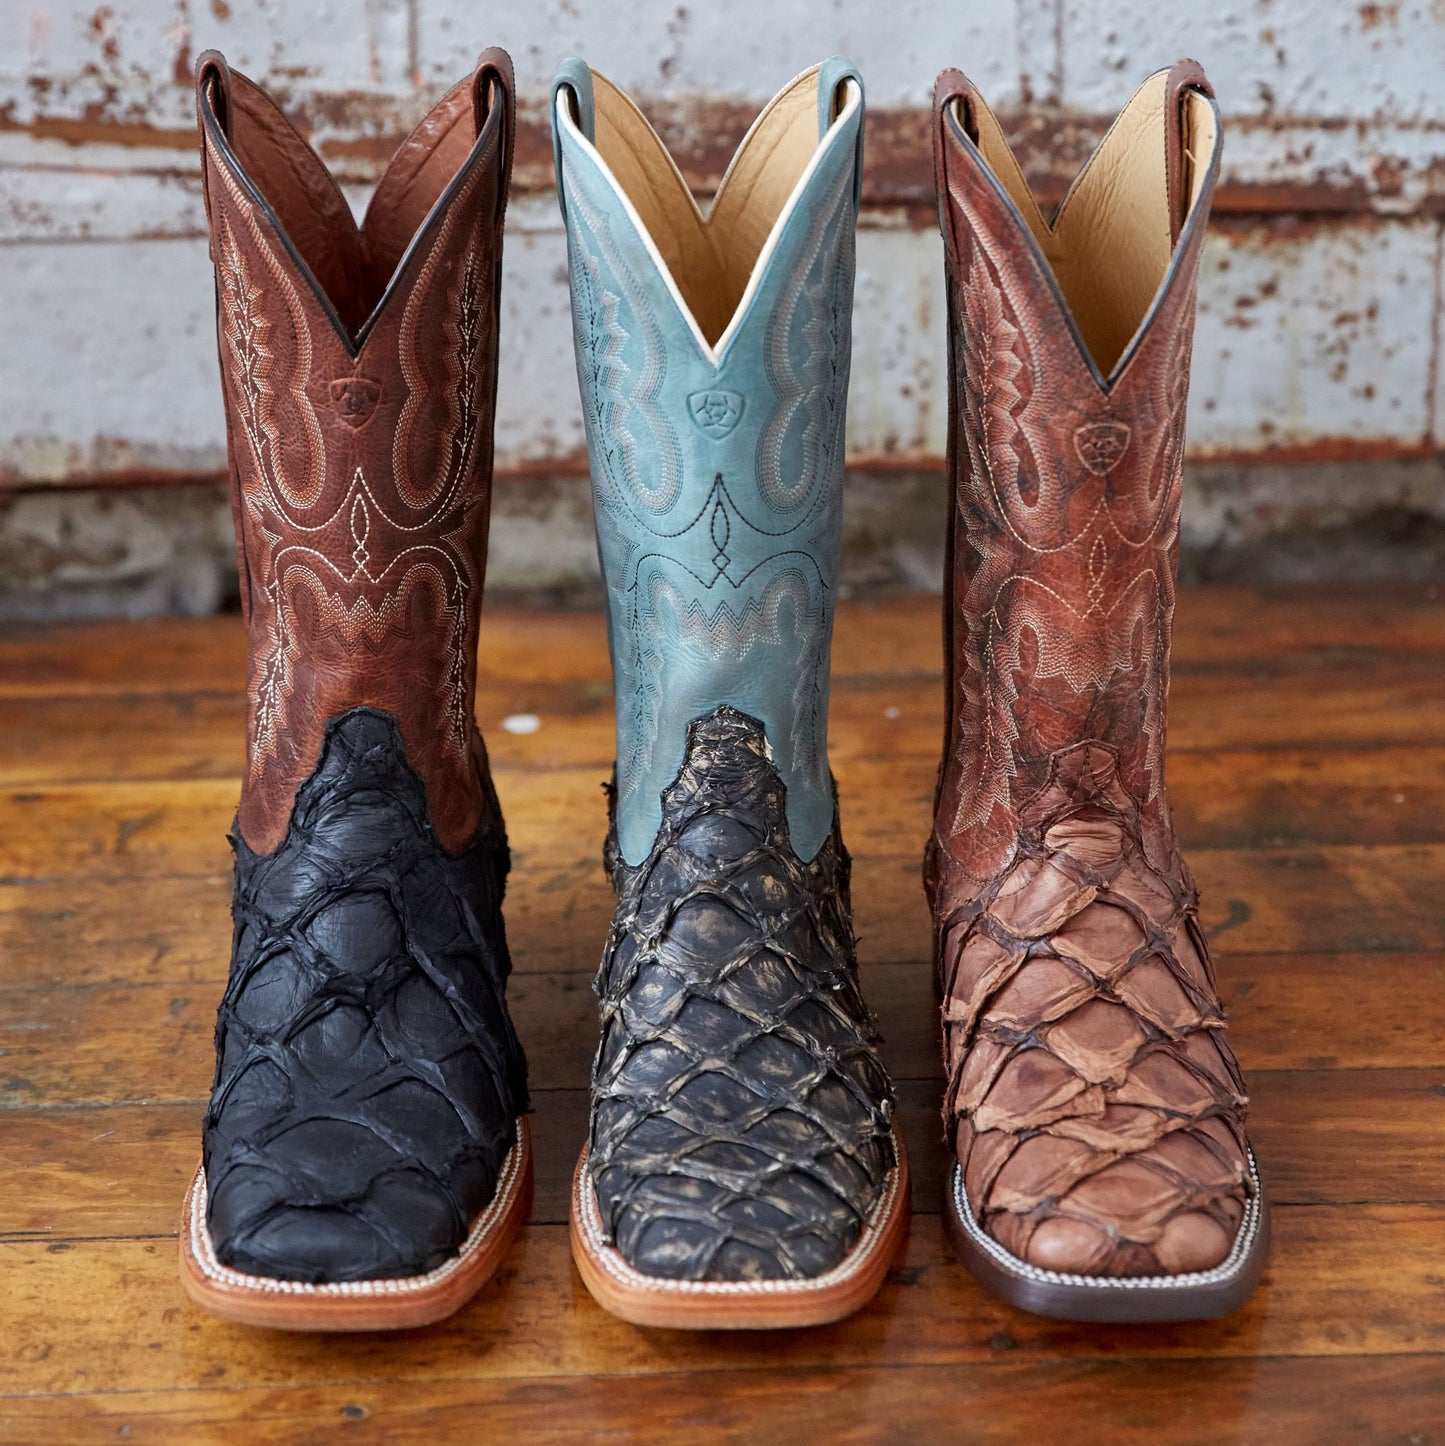 Dixhills Cowboy Boots For Men - Western Boot Men's Cowboy Boots